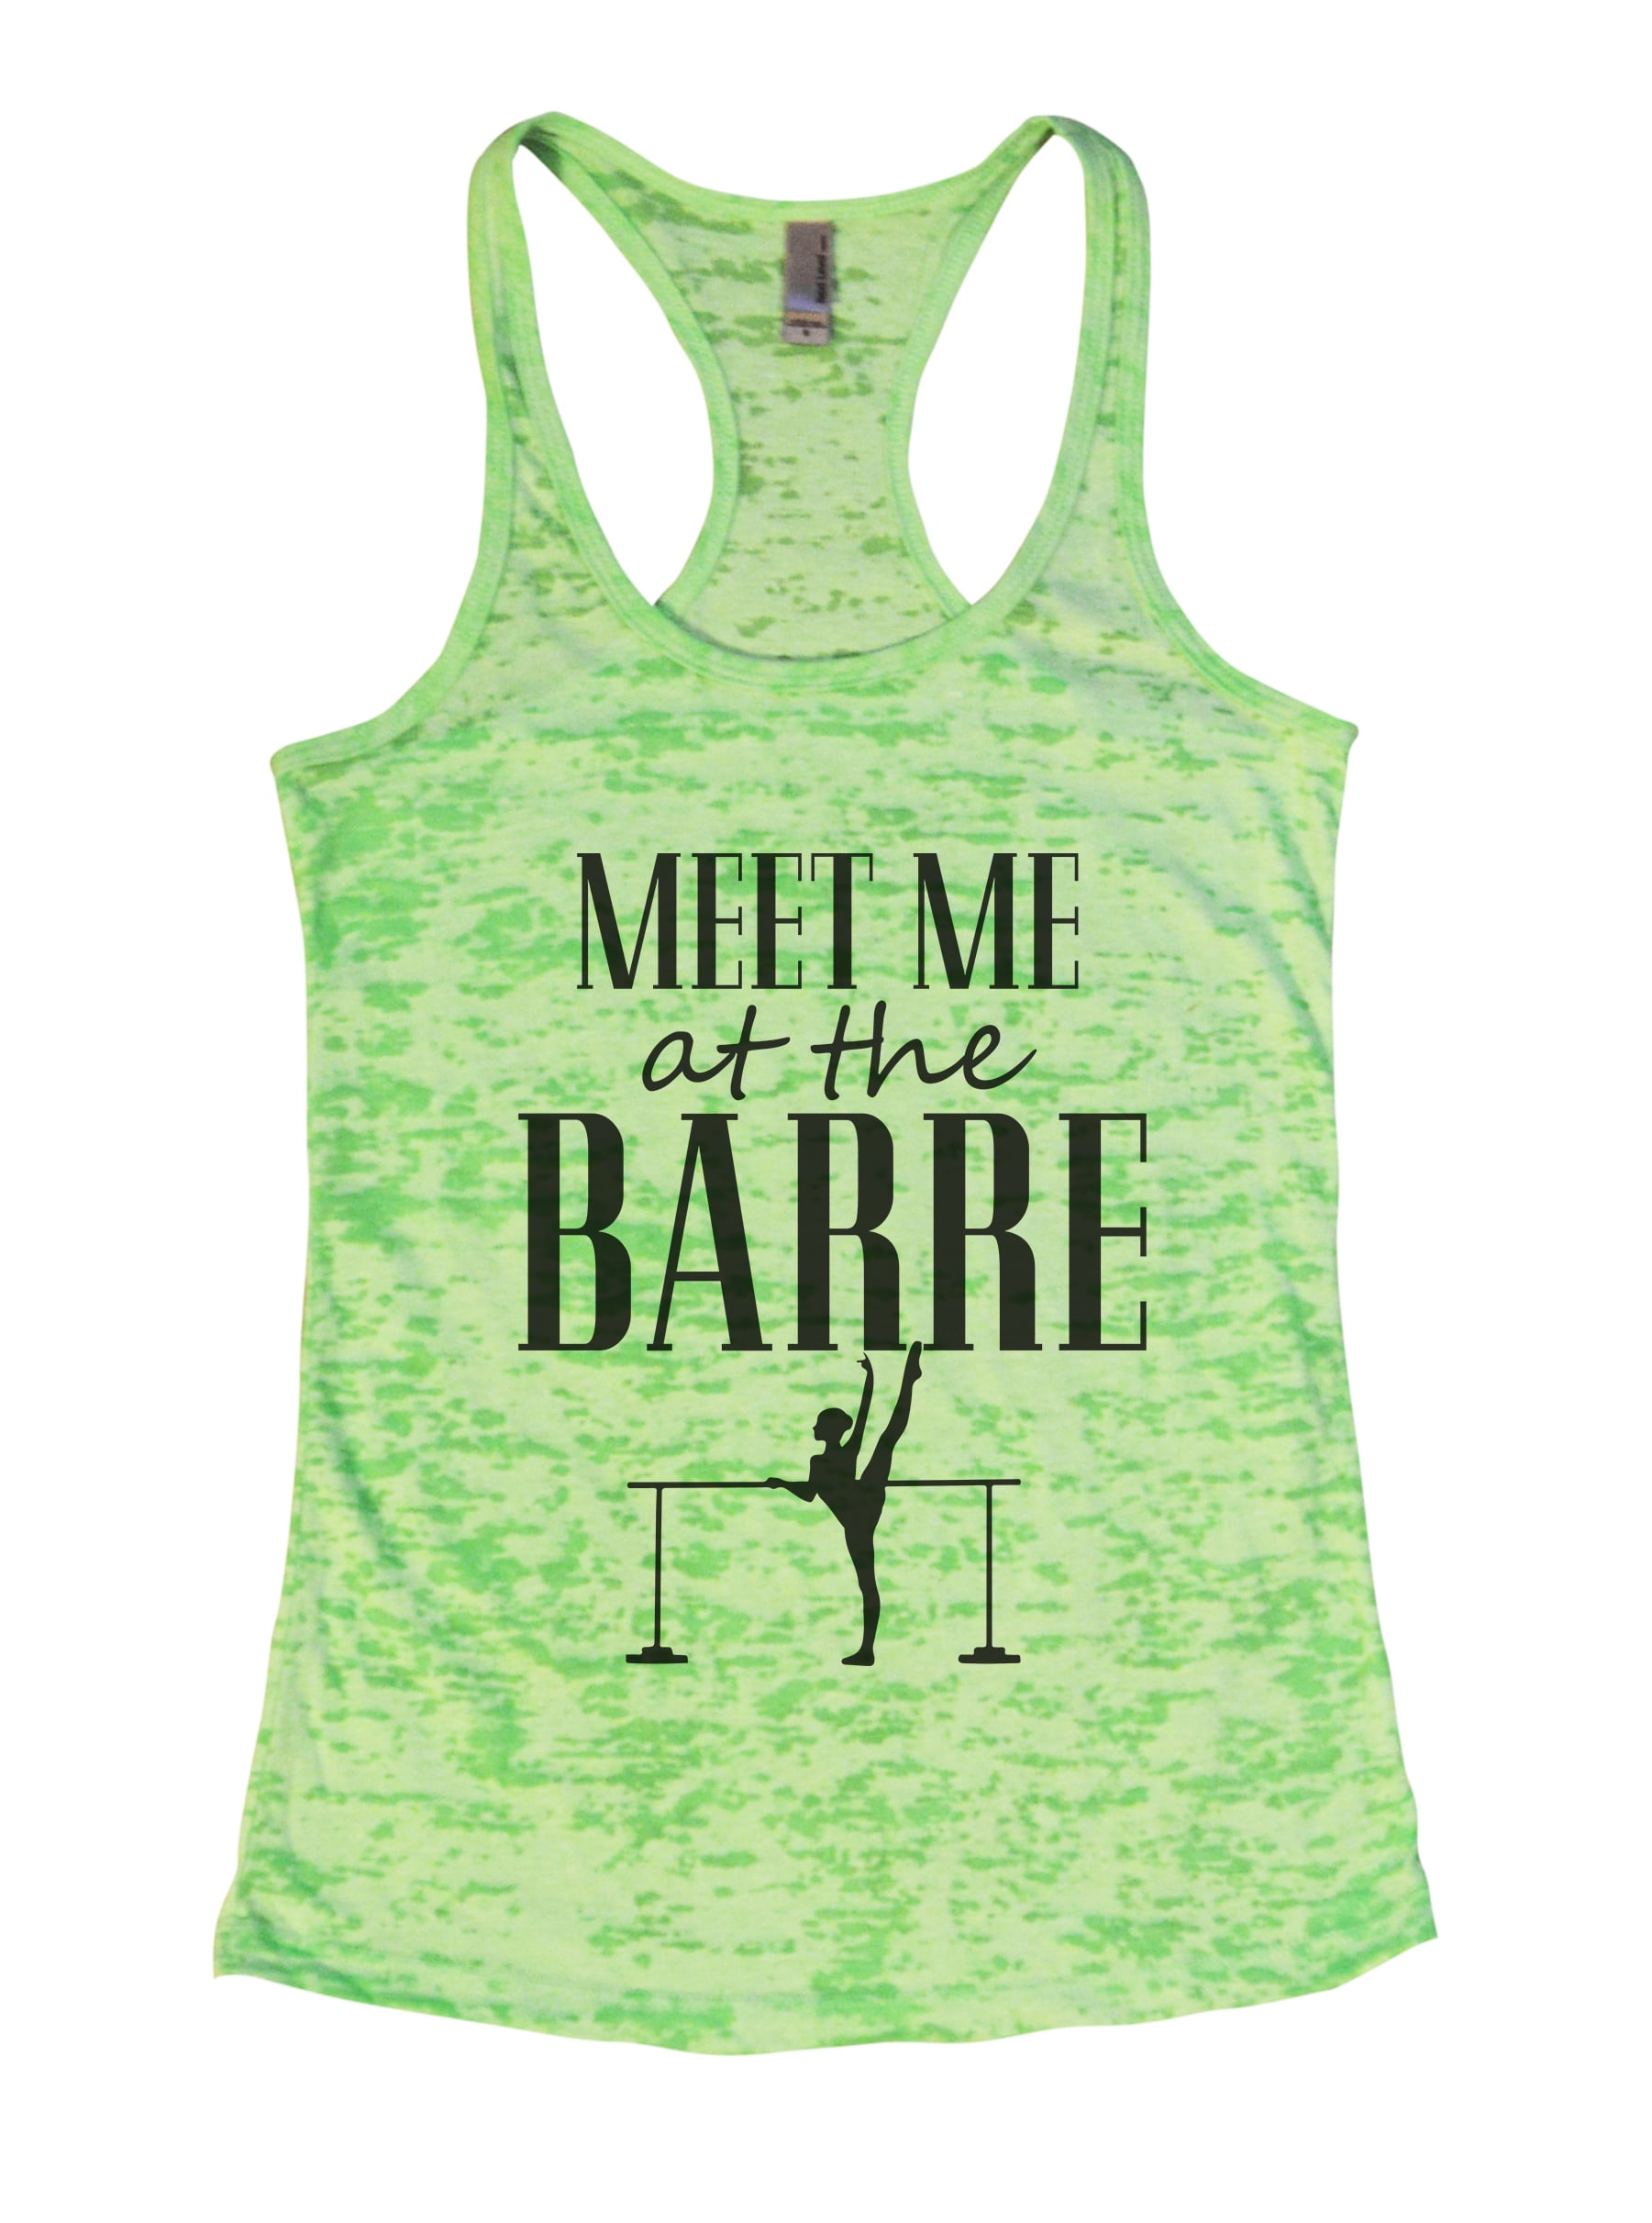 Funny Threadz Womans Burnout Tank Top “Life is Better When You Dance” Ballet Barre Shirt 